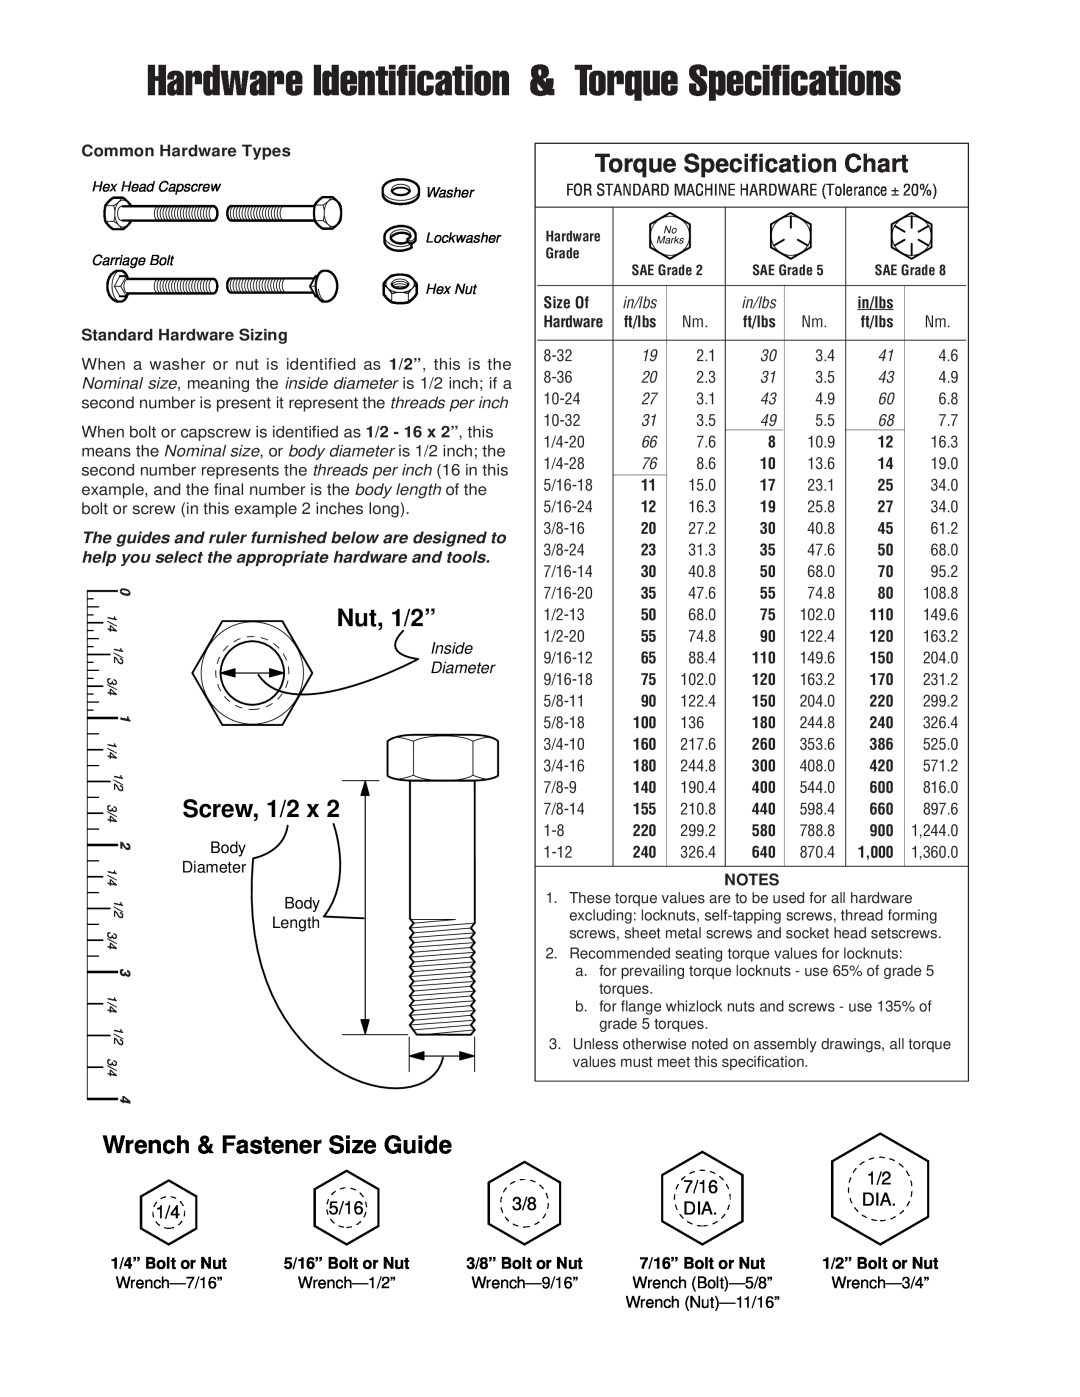 Snapper 2621 manual Hardware Identification & Torque Specifications, Torque Specification Chart, Nut, 1/2”, Screw, 1/2 